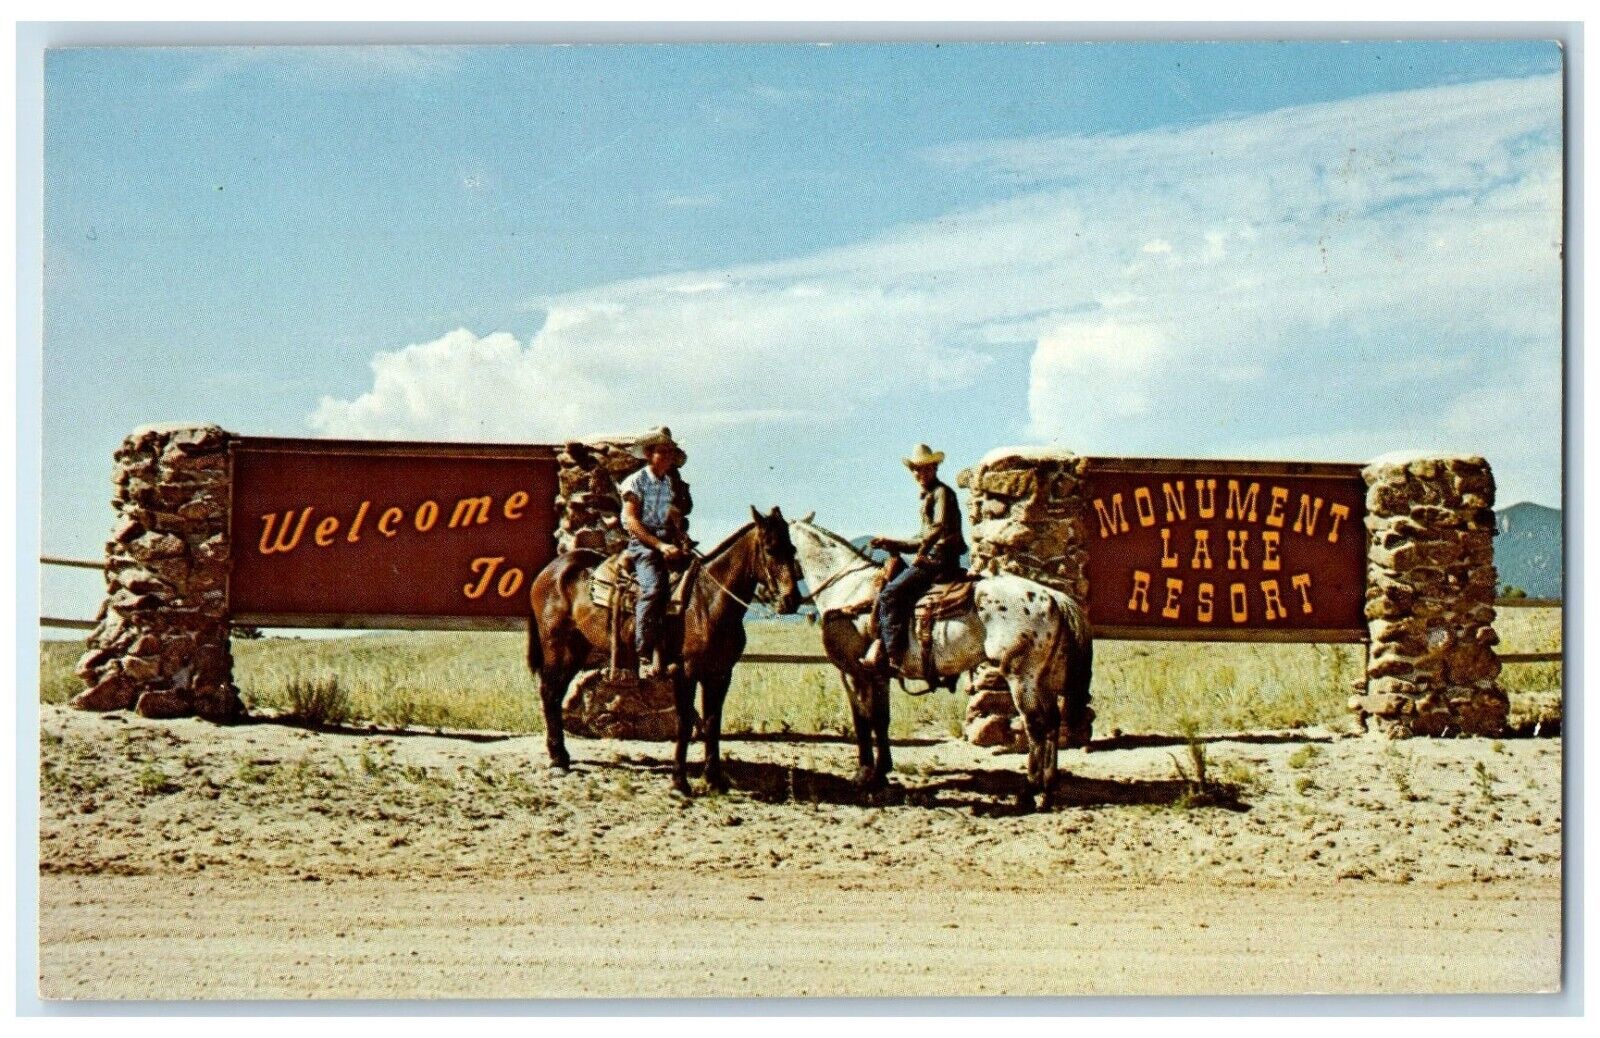 c1960 Monument Lake Resort Riding Horse Colorado CO Vintage Unposted Postcard